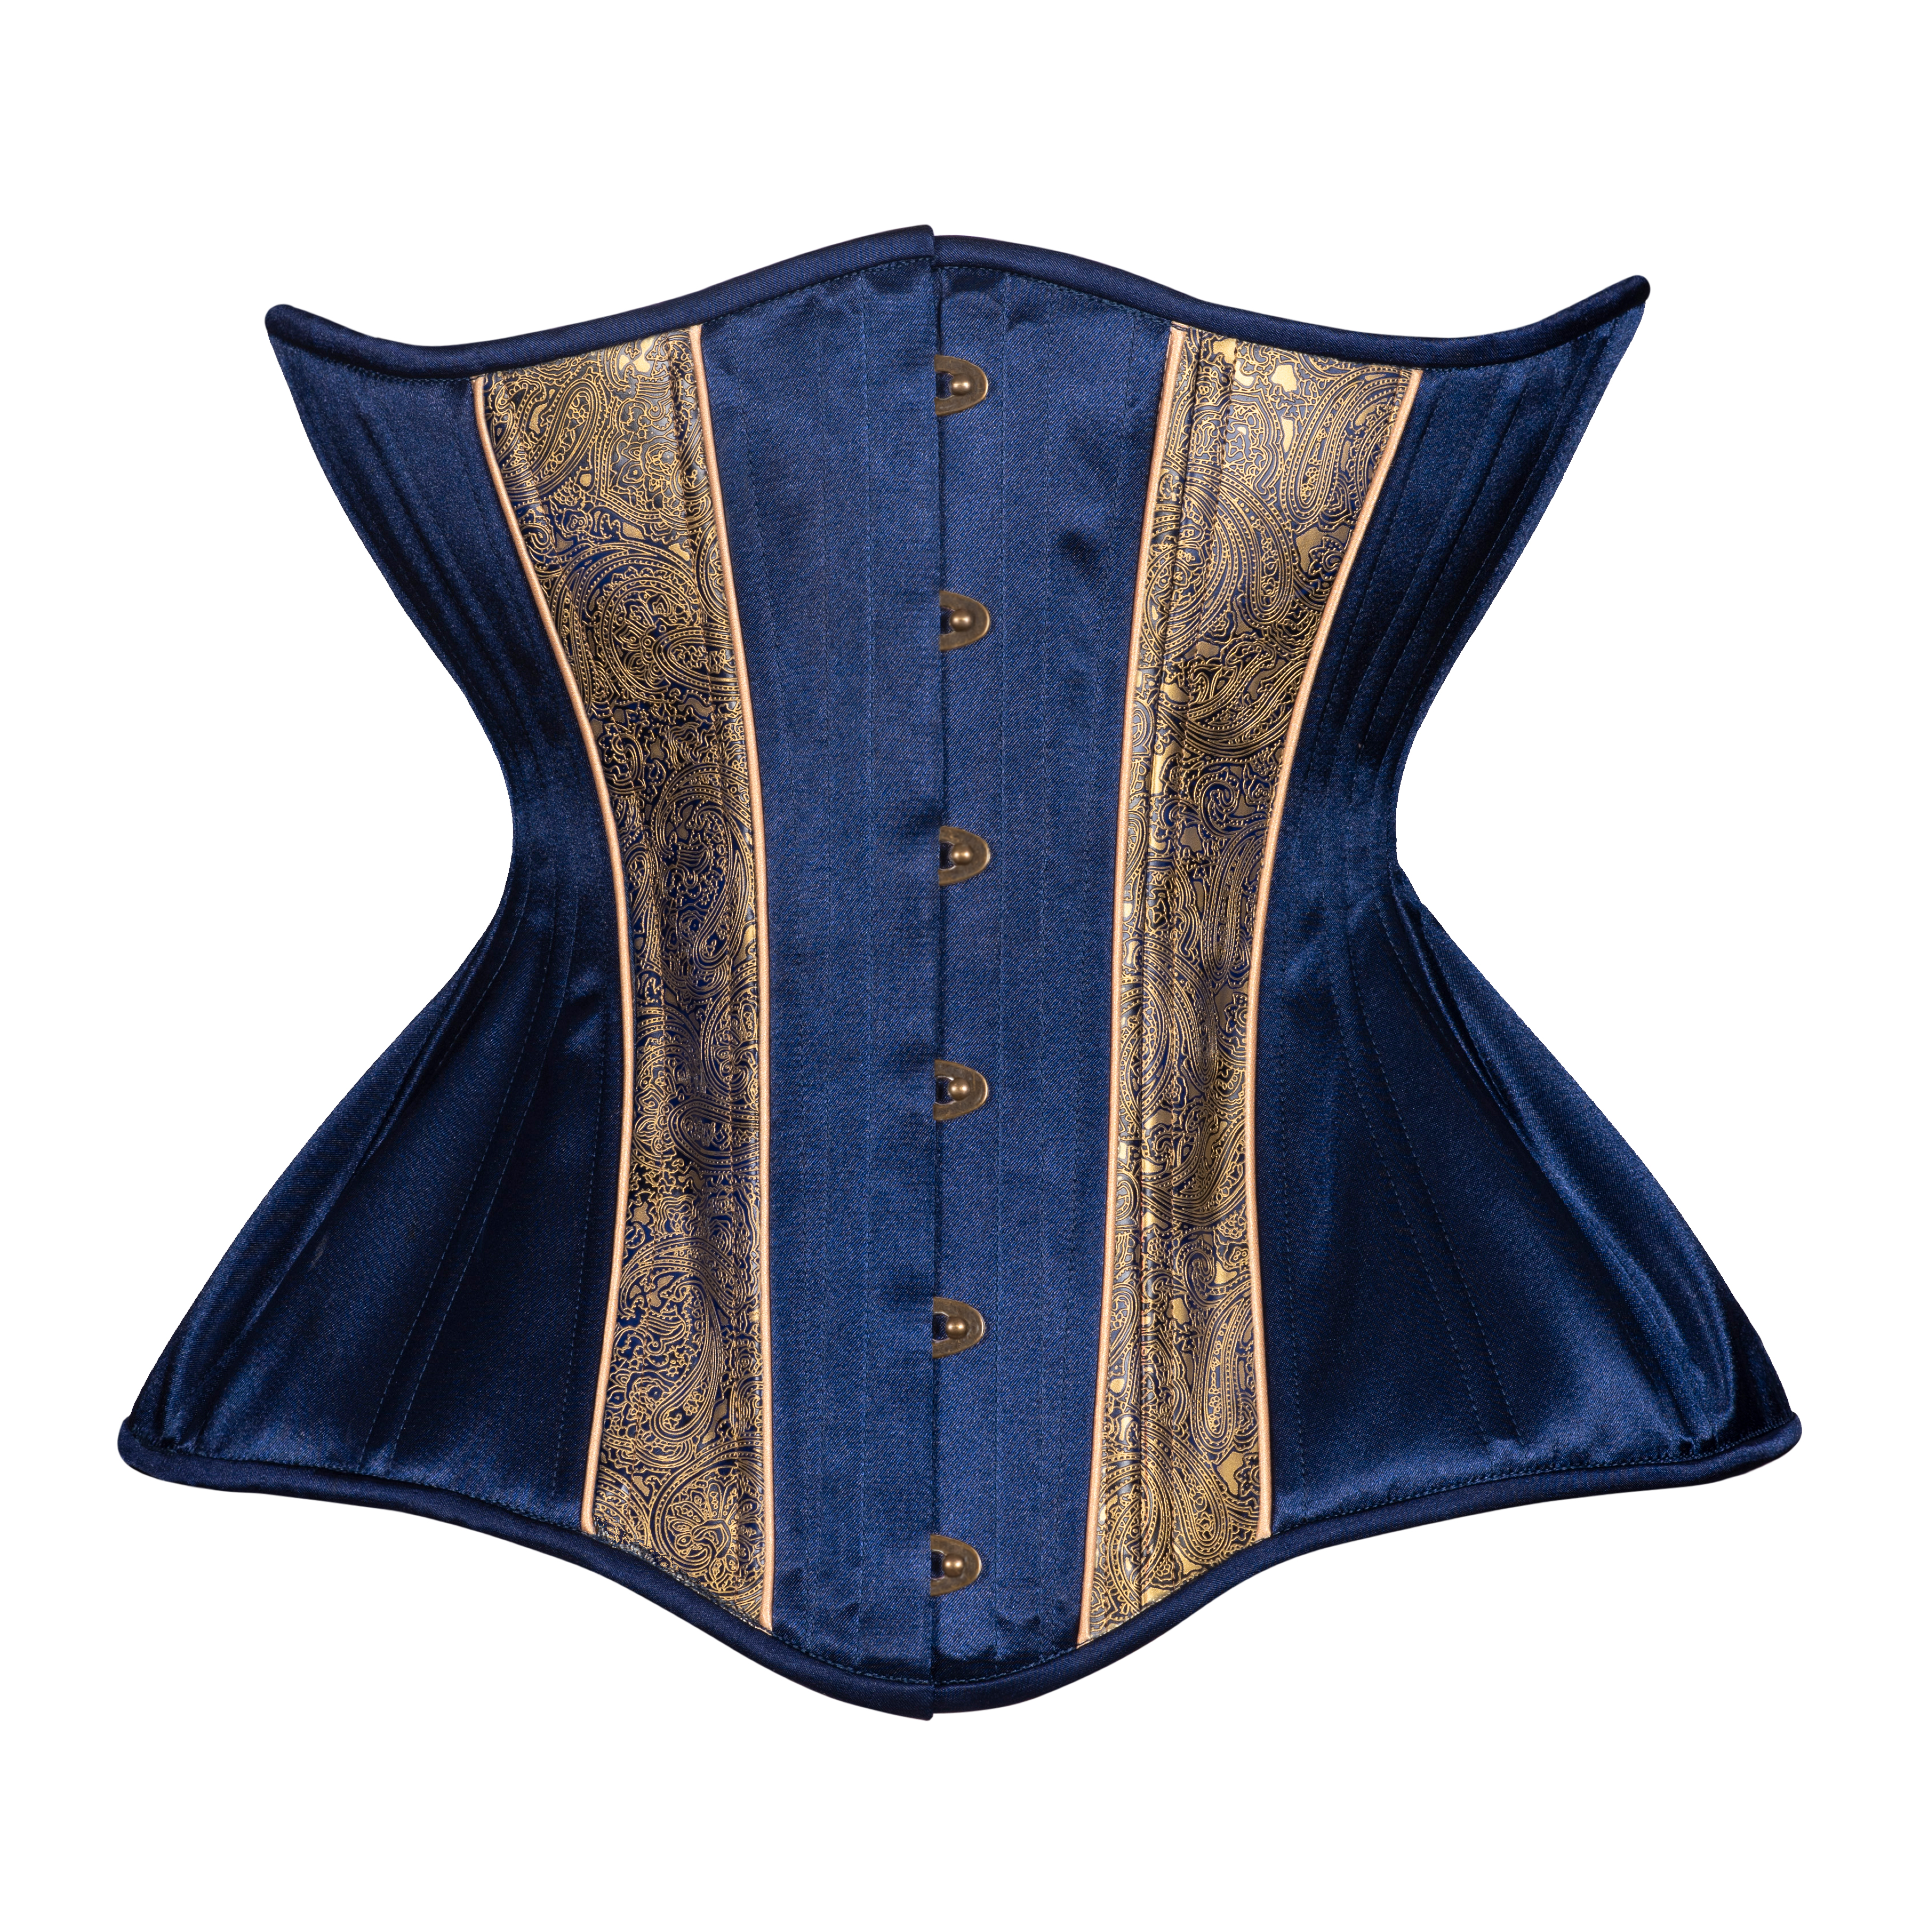 FREE CORSET PATTERN - Fully boned long-back corset